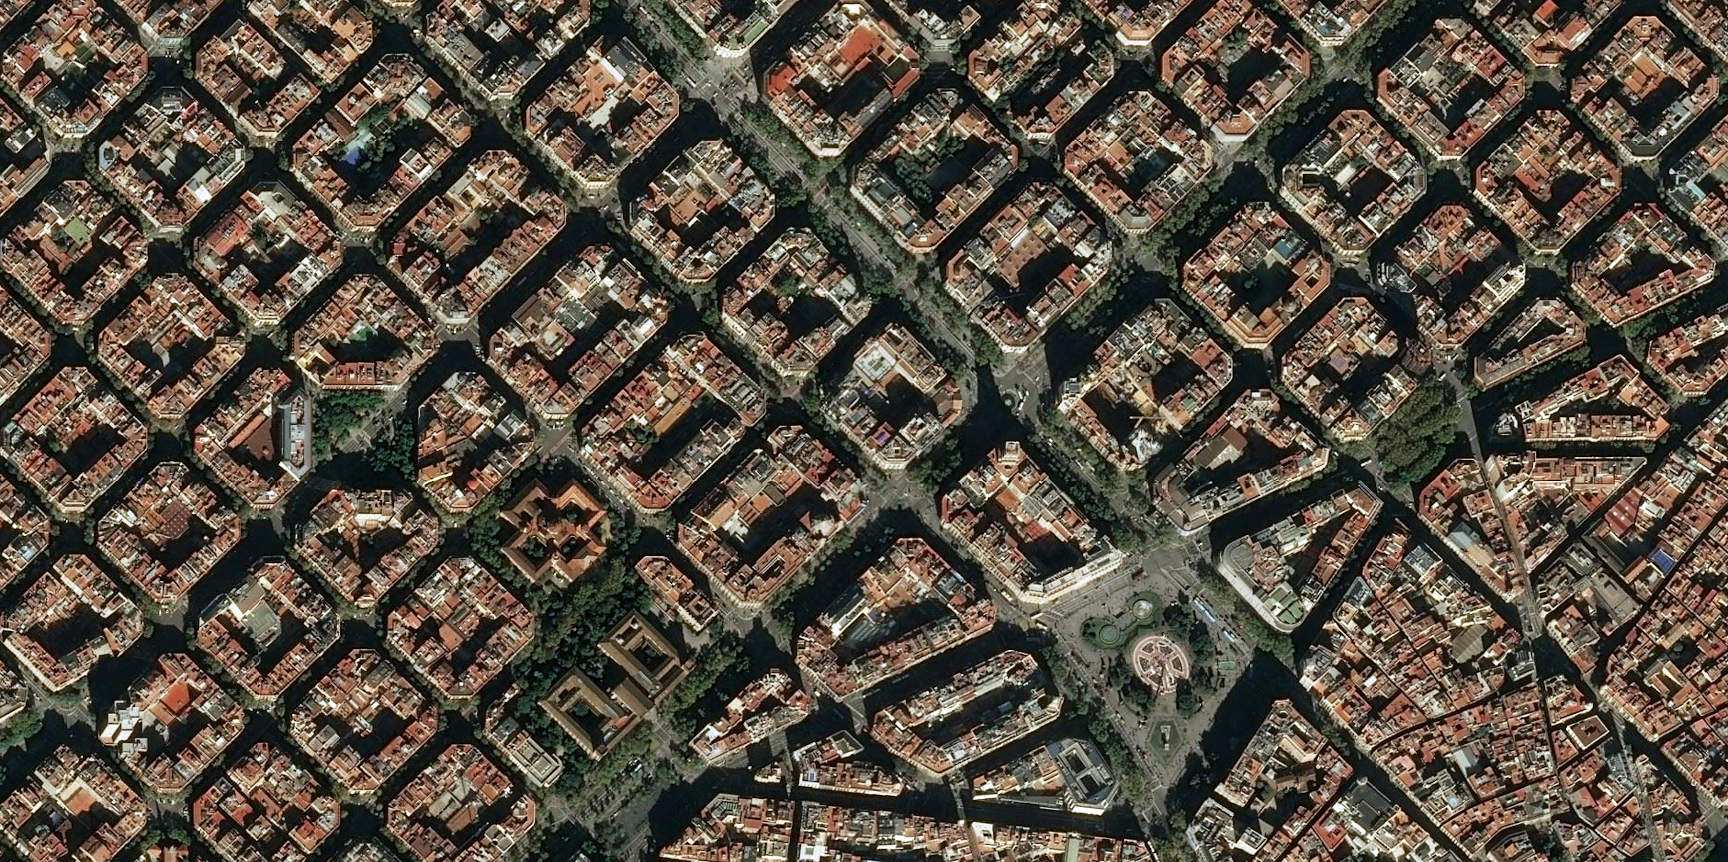 Vergrösserte Ansicht: Häuserblocks in Barcelona ( CC BY-NC-ND 4.0 / o-media / OpenStreetMap / mapy.cz )